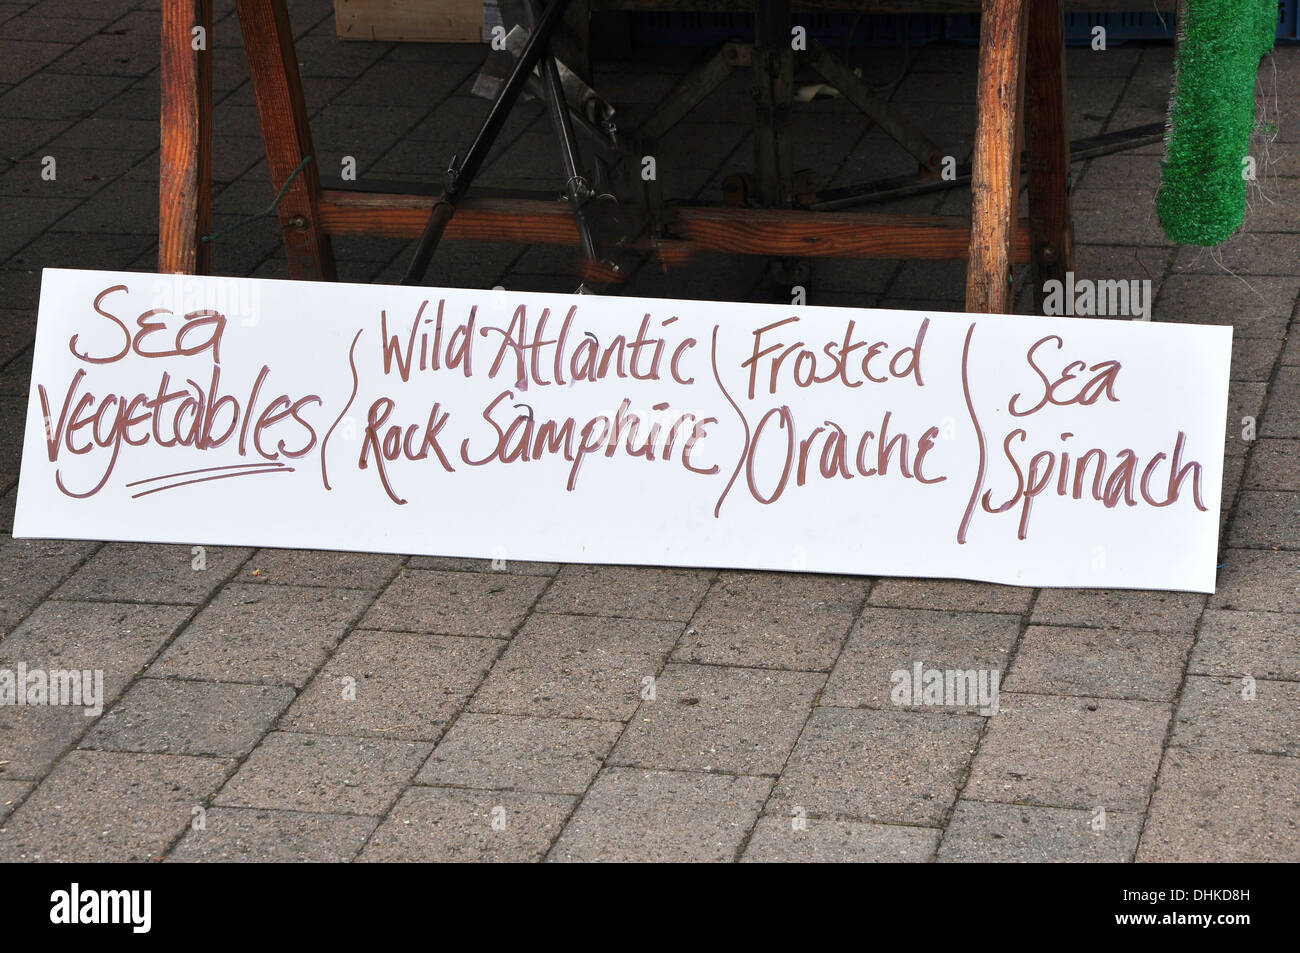 Sea vegetables for sale sign, Midleton, Cork, Ireland. Stock Photo